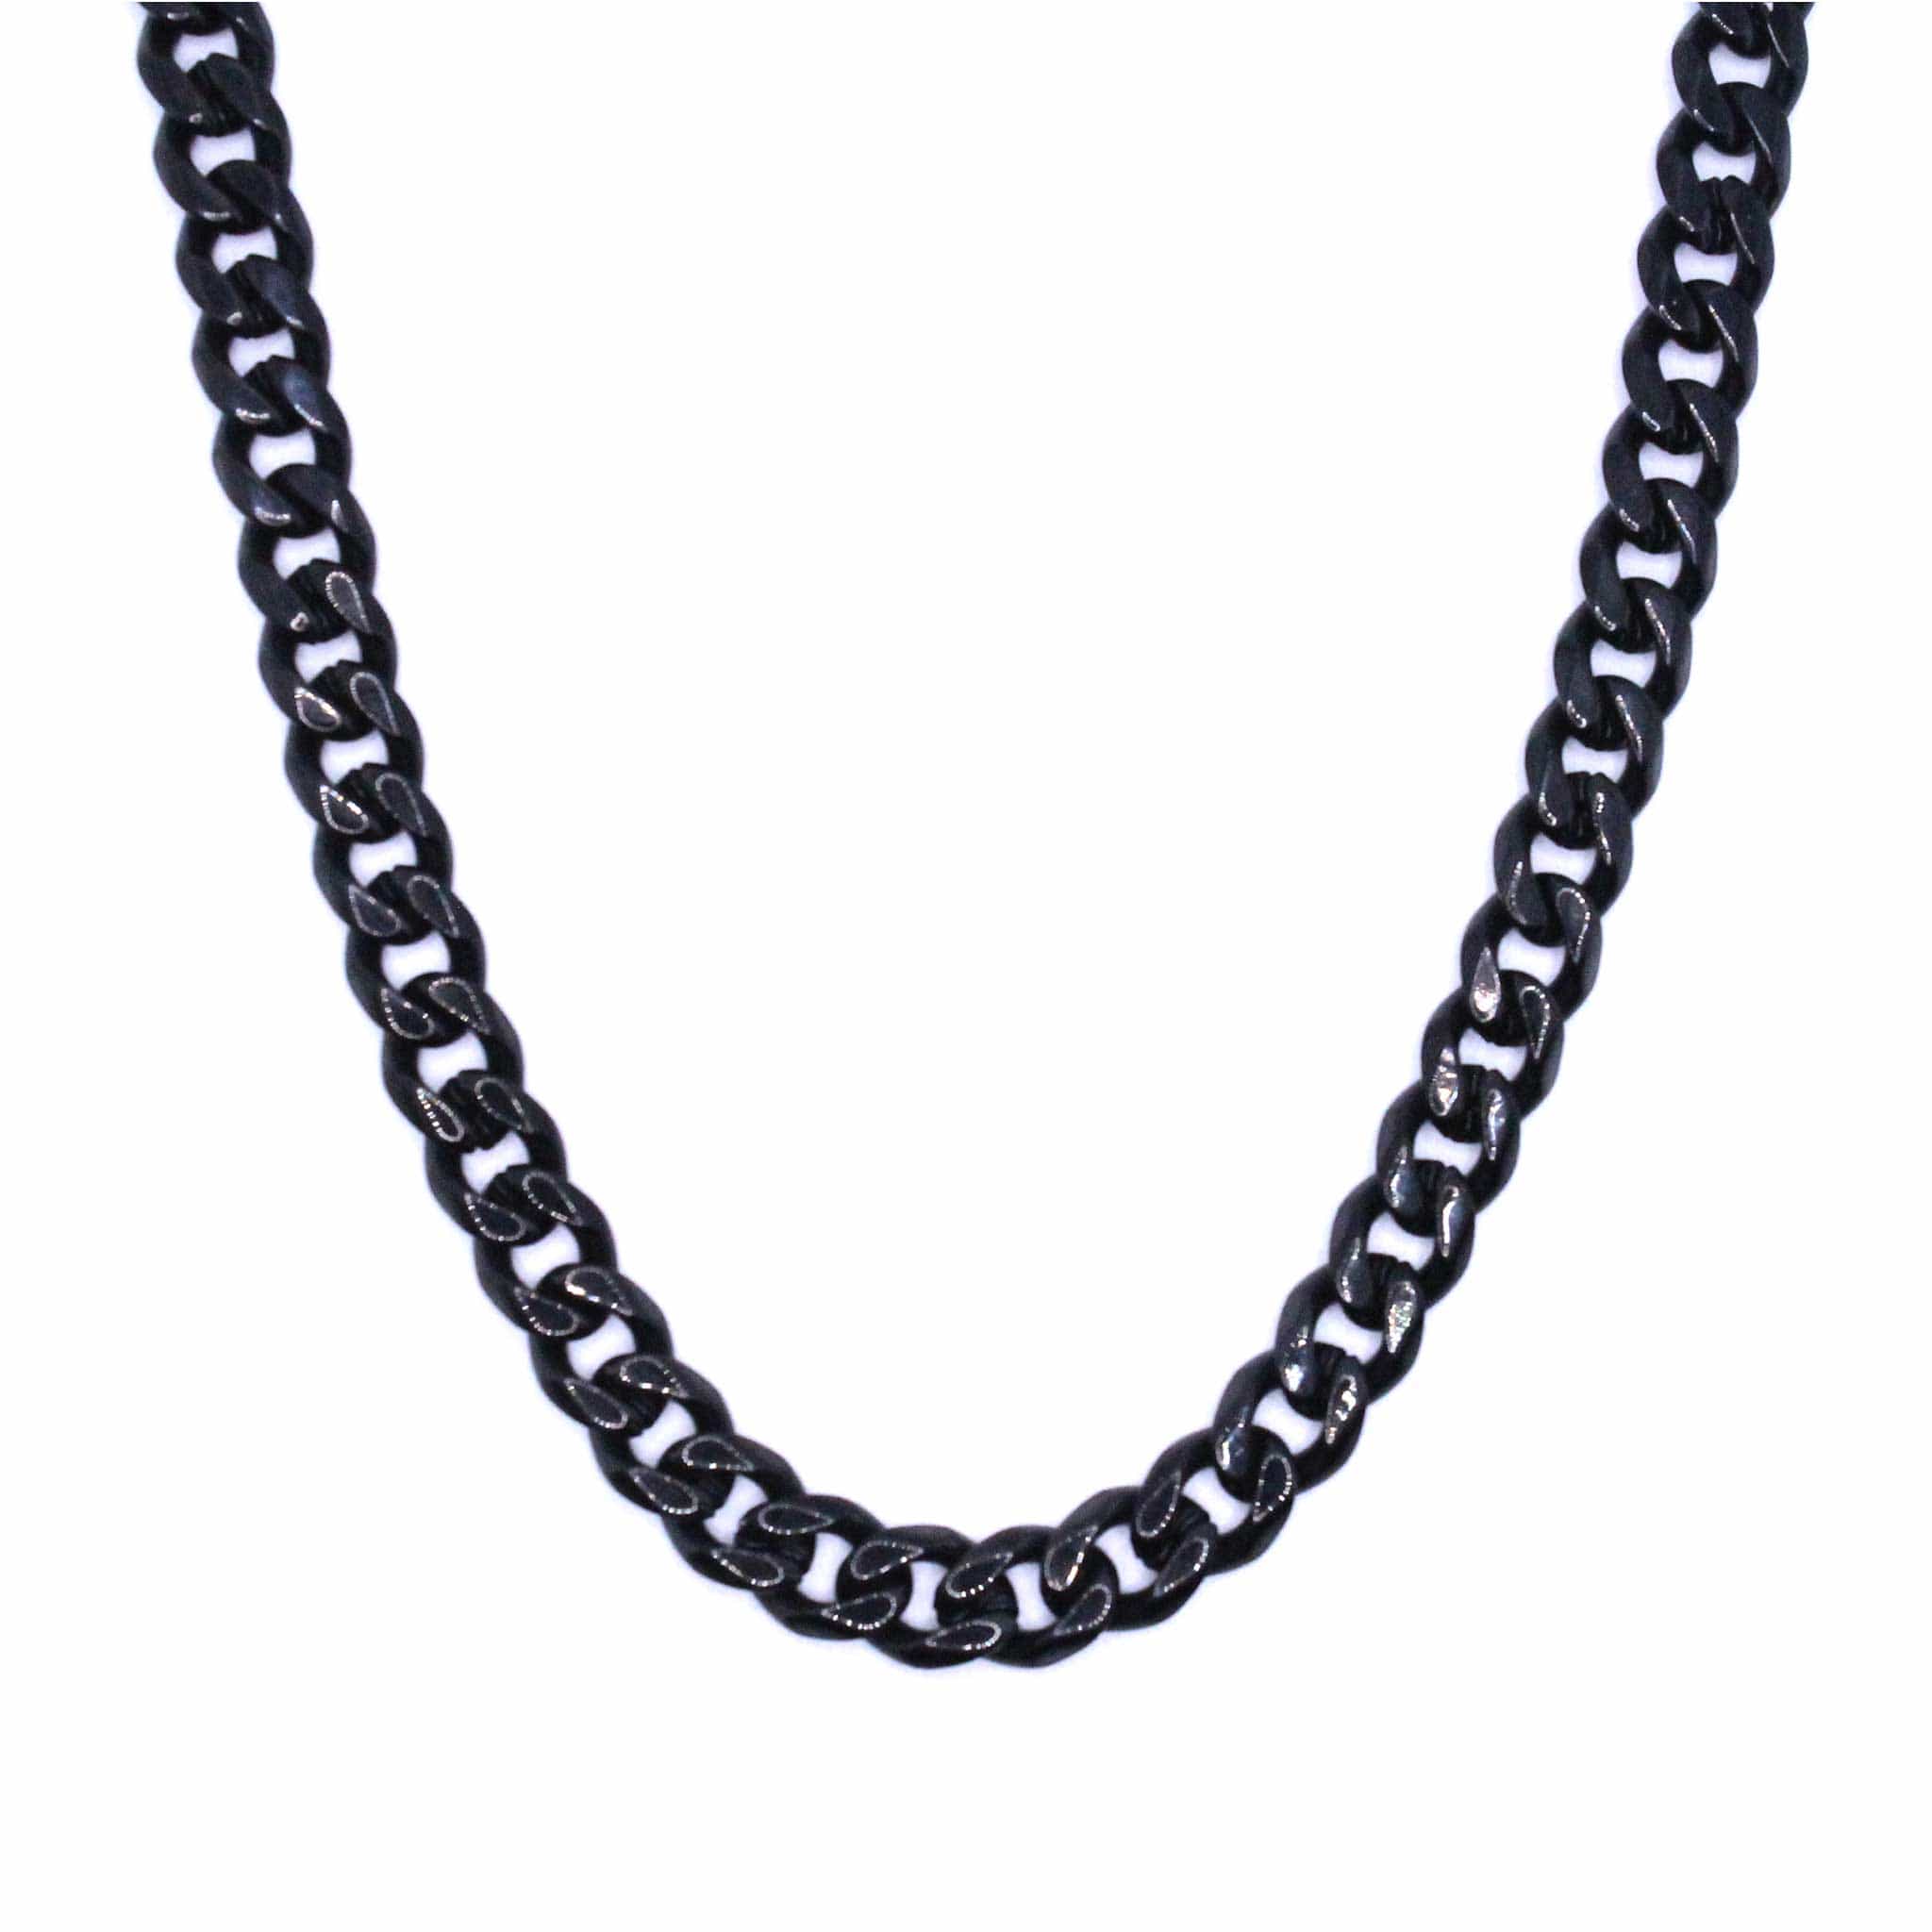 7mm cuban chain